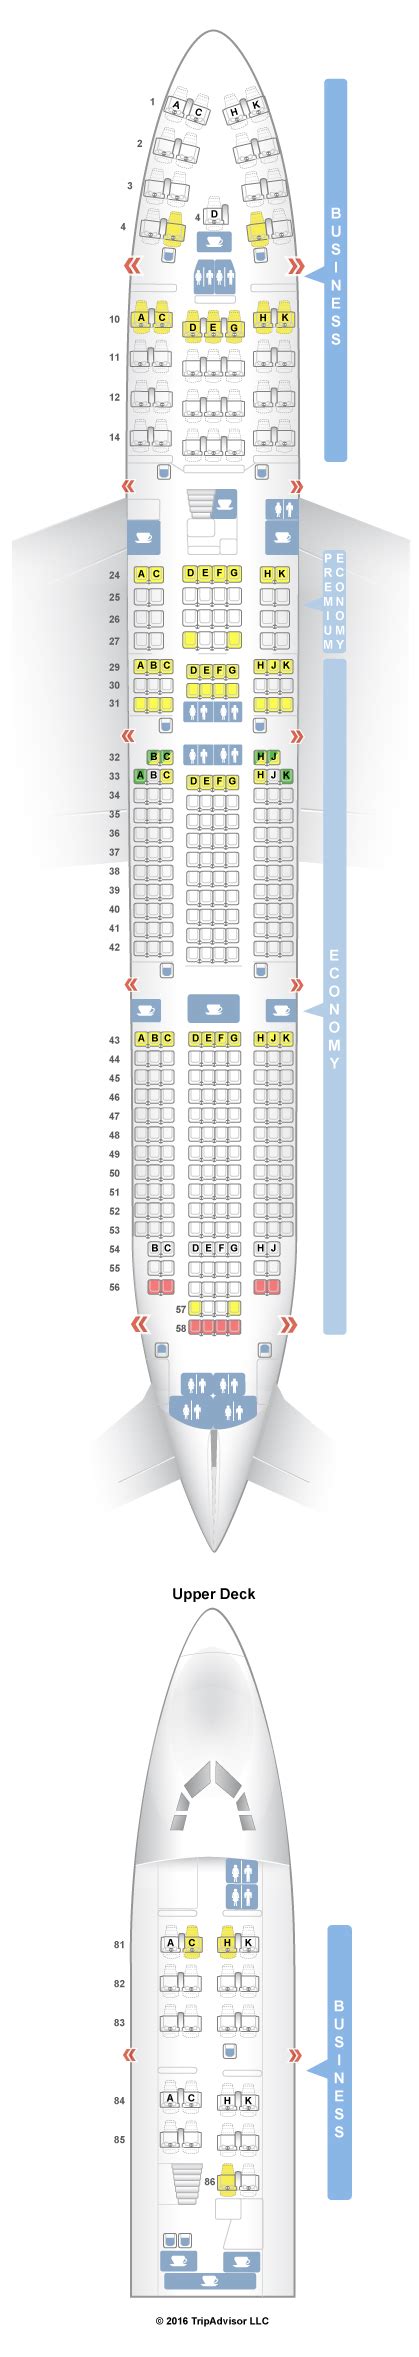 Airbus A380 Lufthansa Seat Map